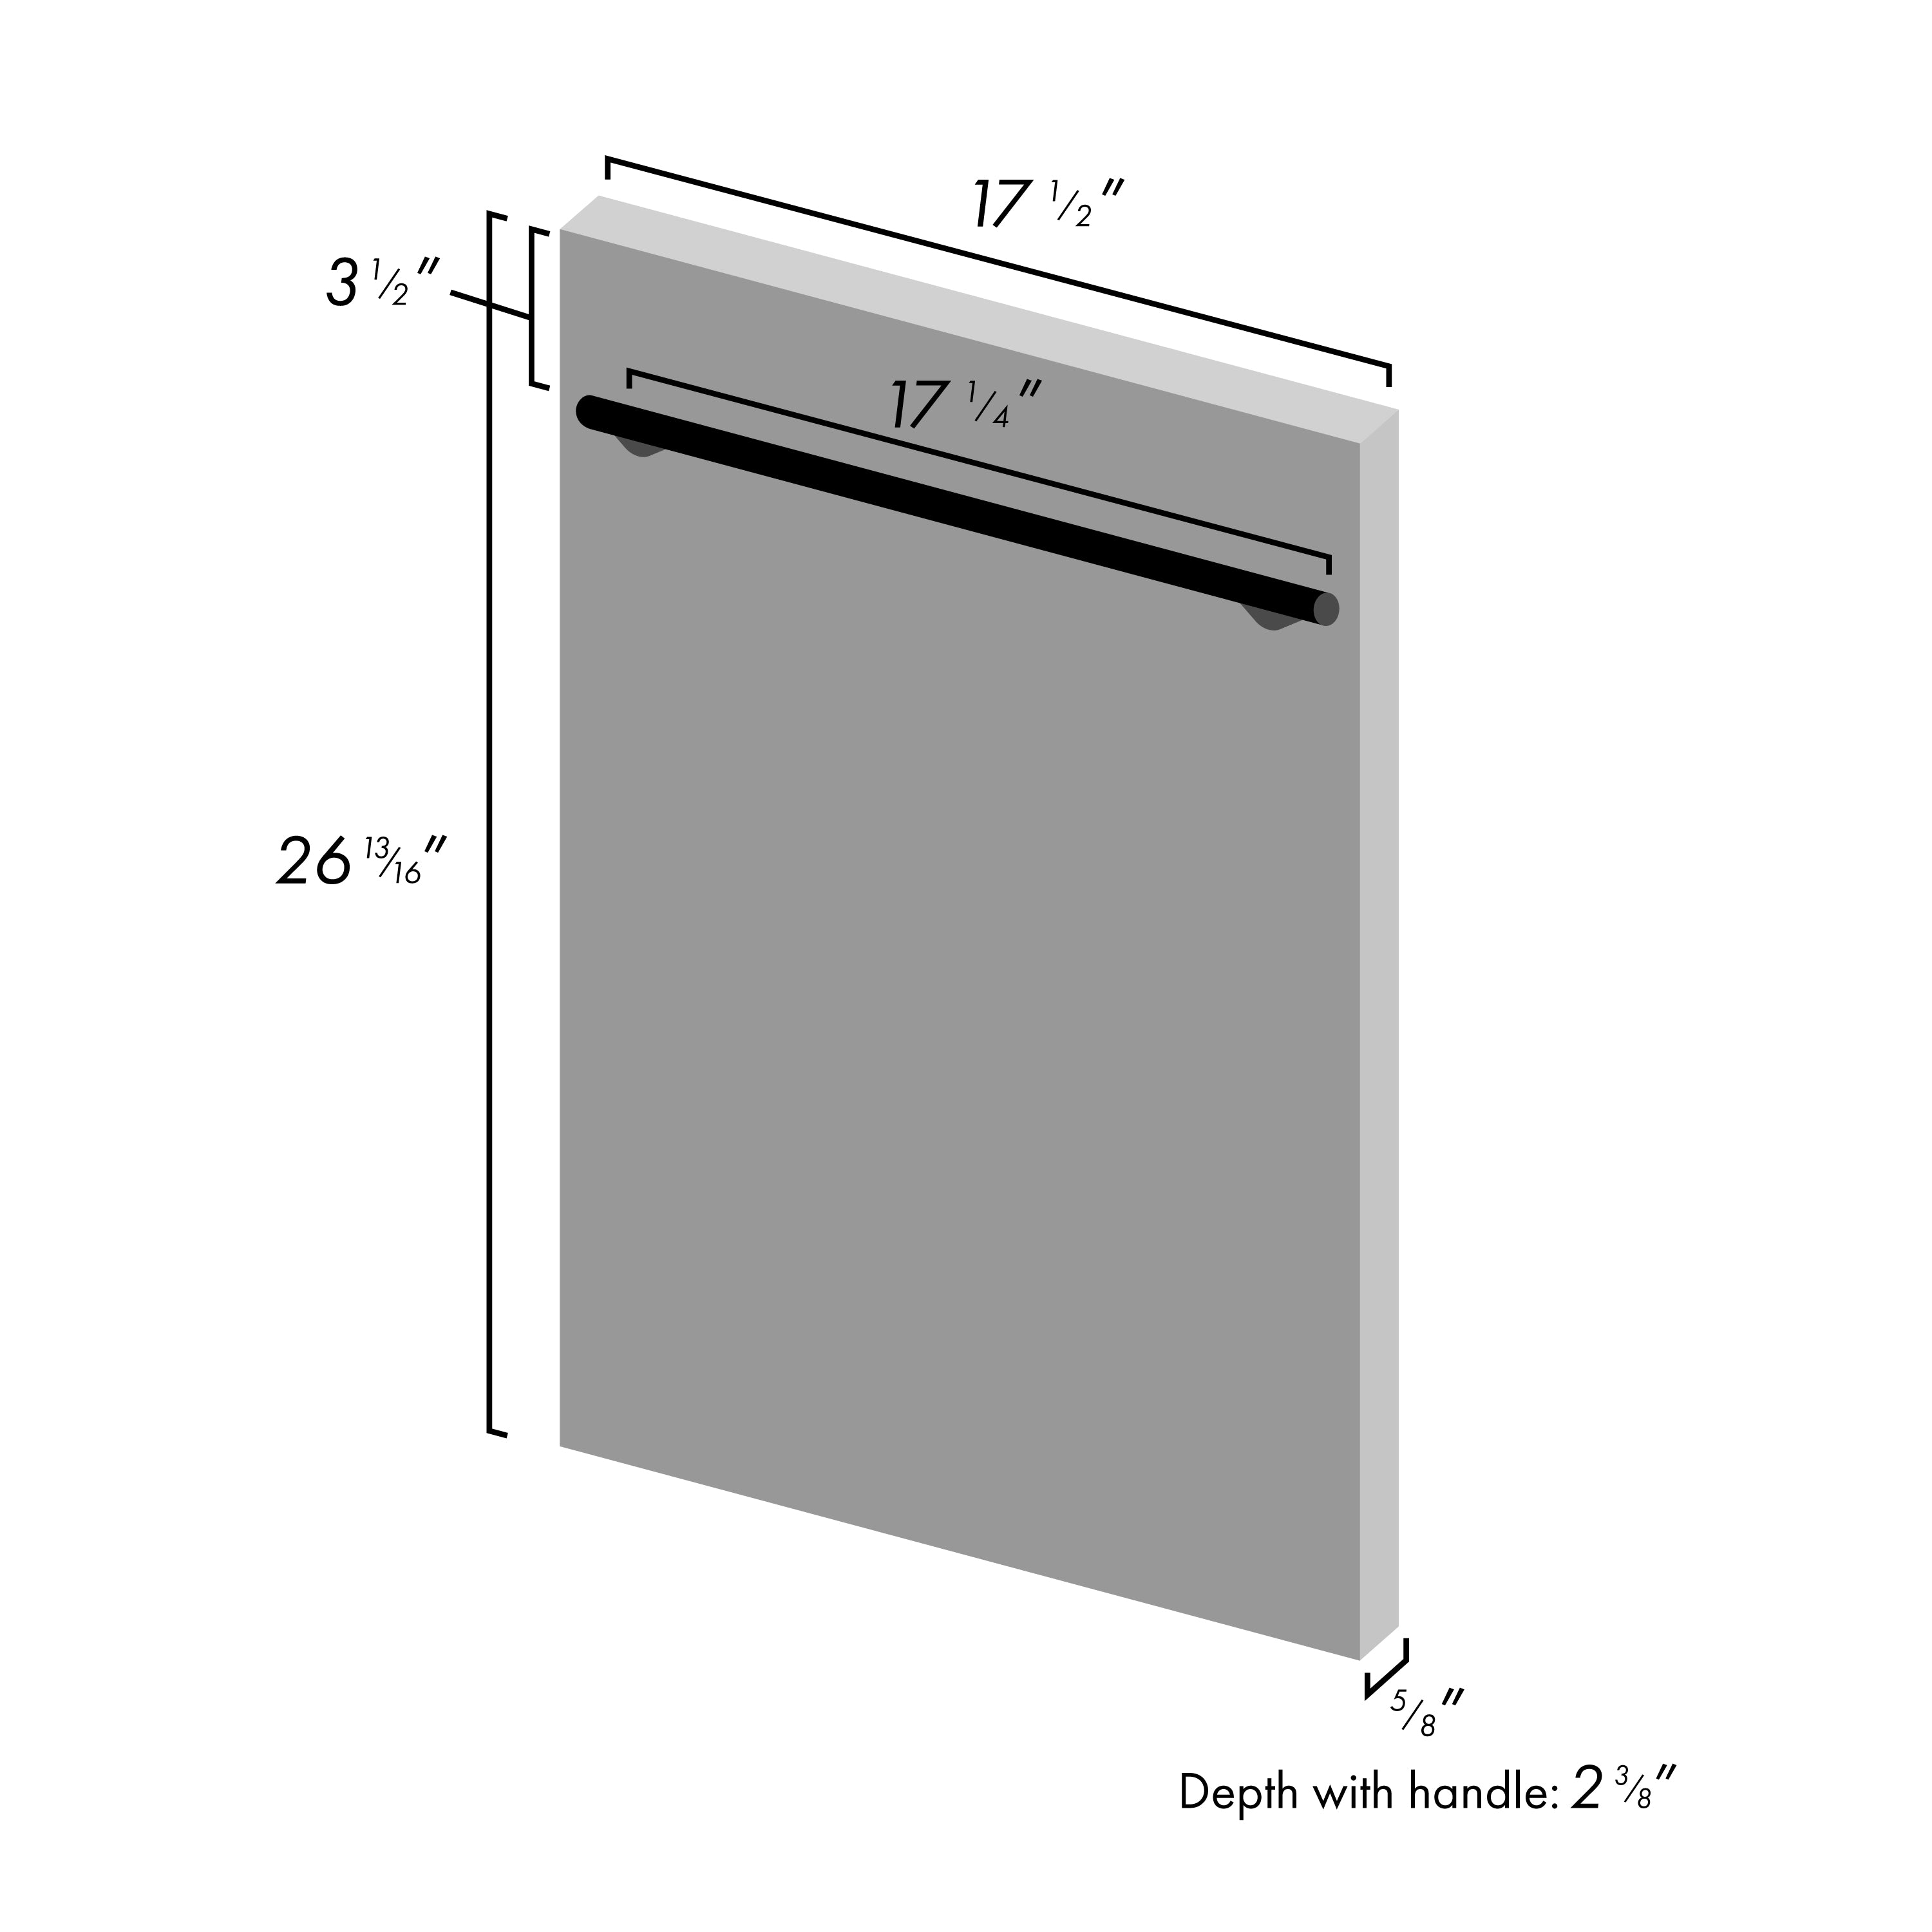 ZLINE 18" Dishwasher Panel in Blue Gloss with Modern Handle (DP-BG-H-18)